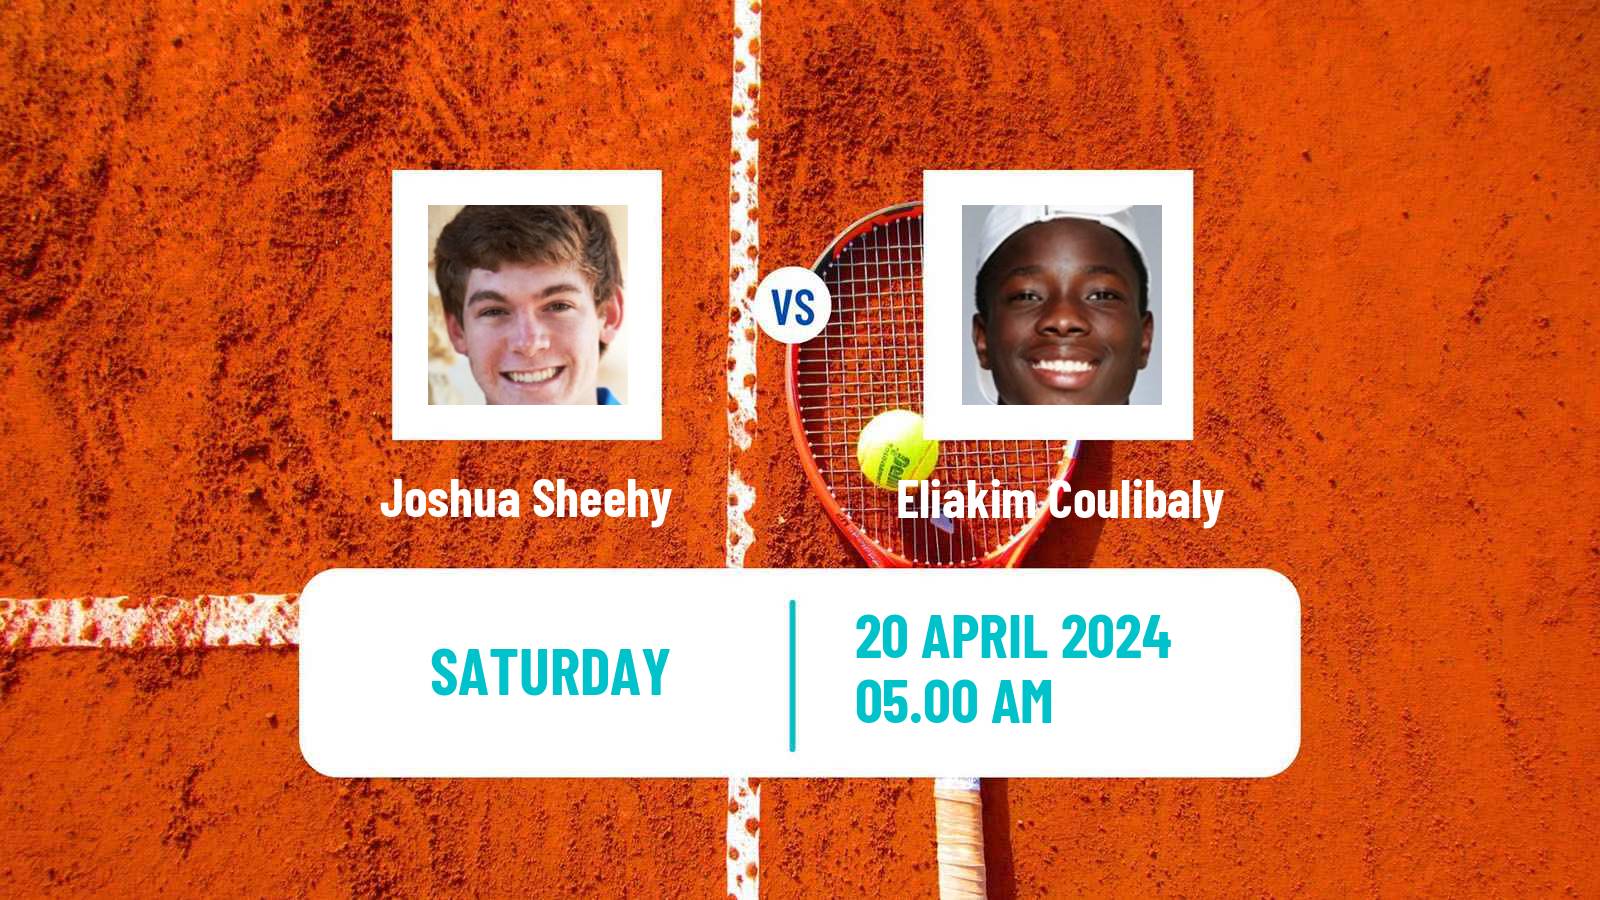 Tennis ITF M15 Monastir 16 Men Joshua Sheehy - Eliakim Coulibaly